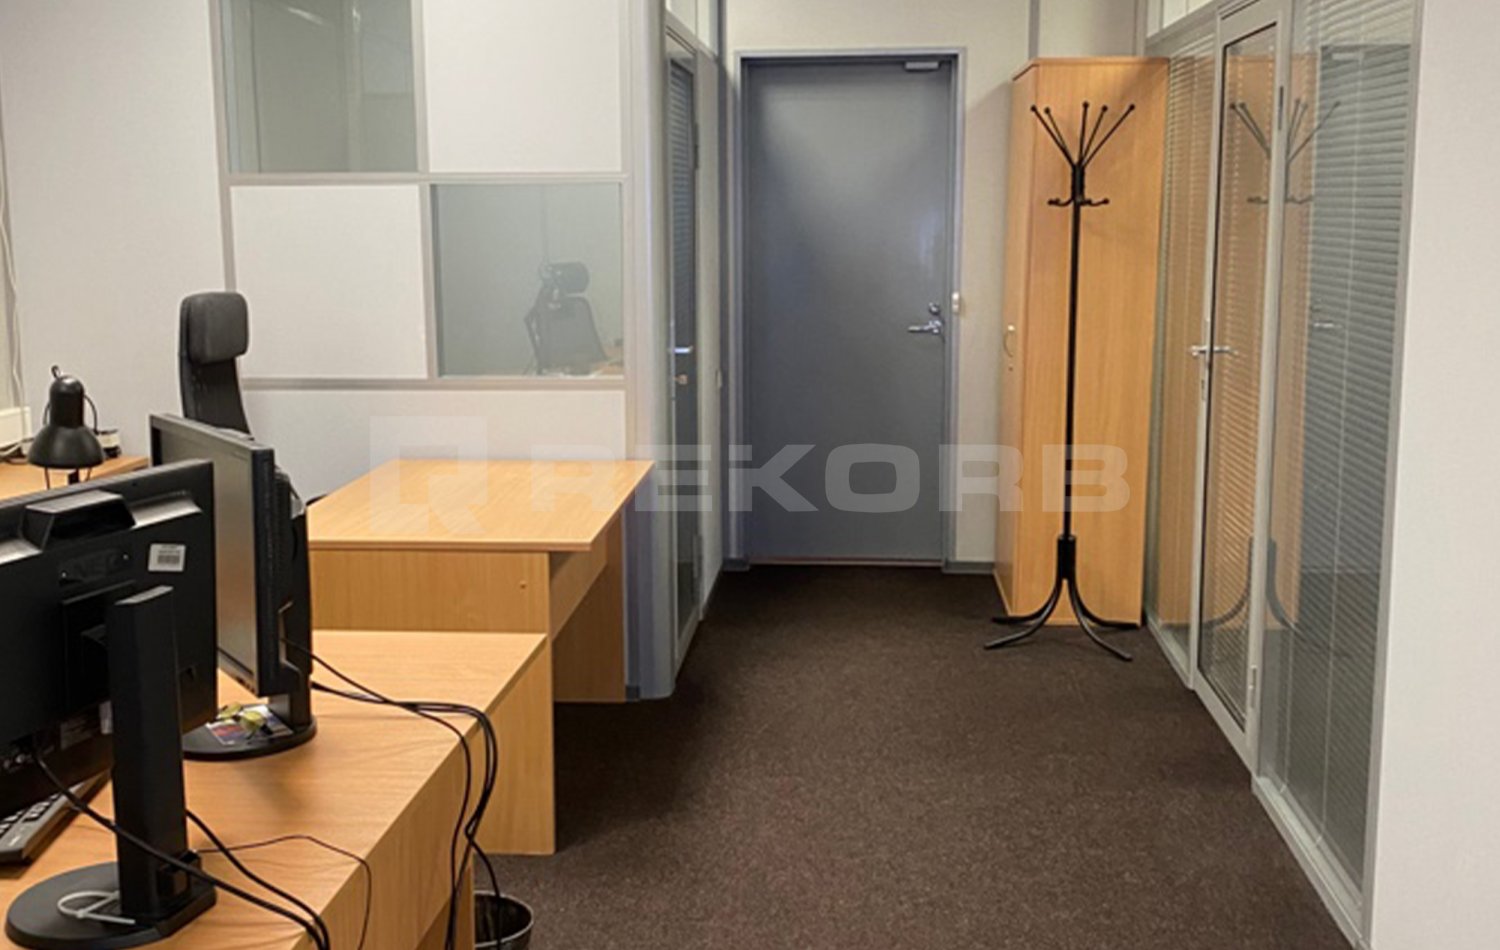 Офис в аренду 140 кв.м. в БЦ Воронцовъ - фото 1